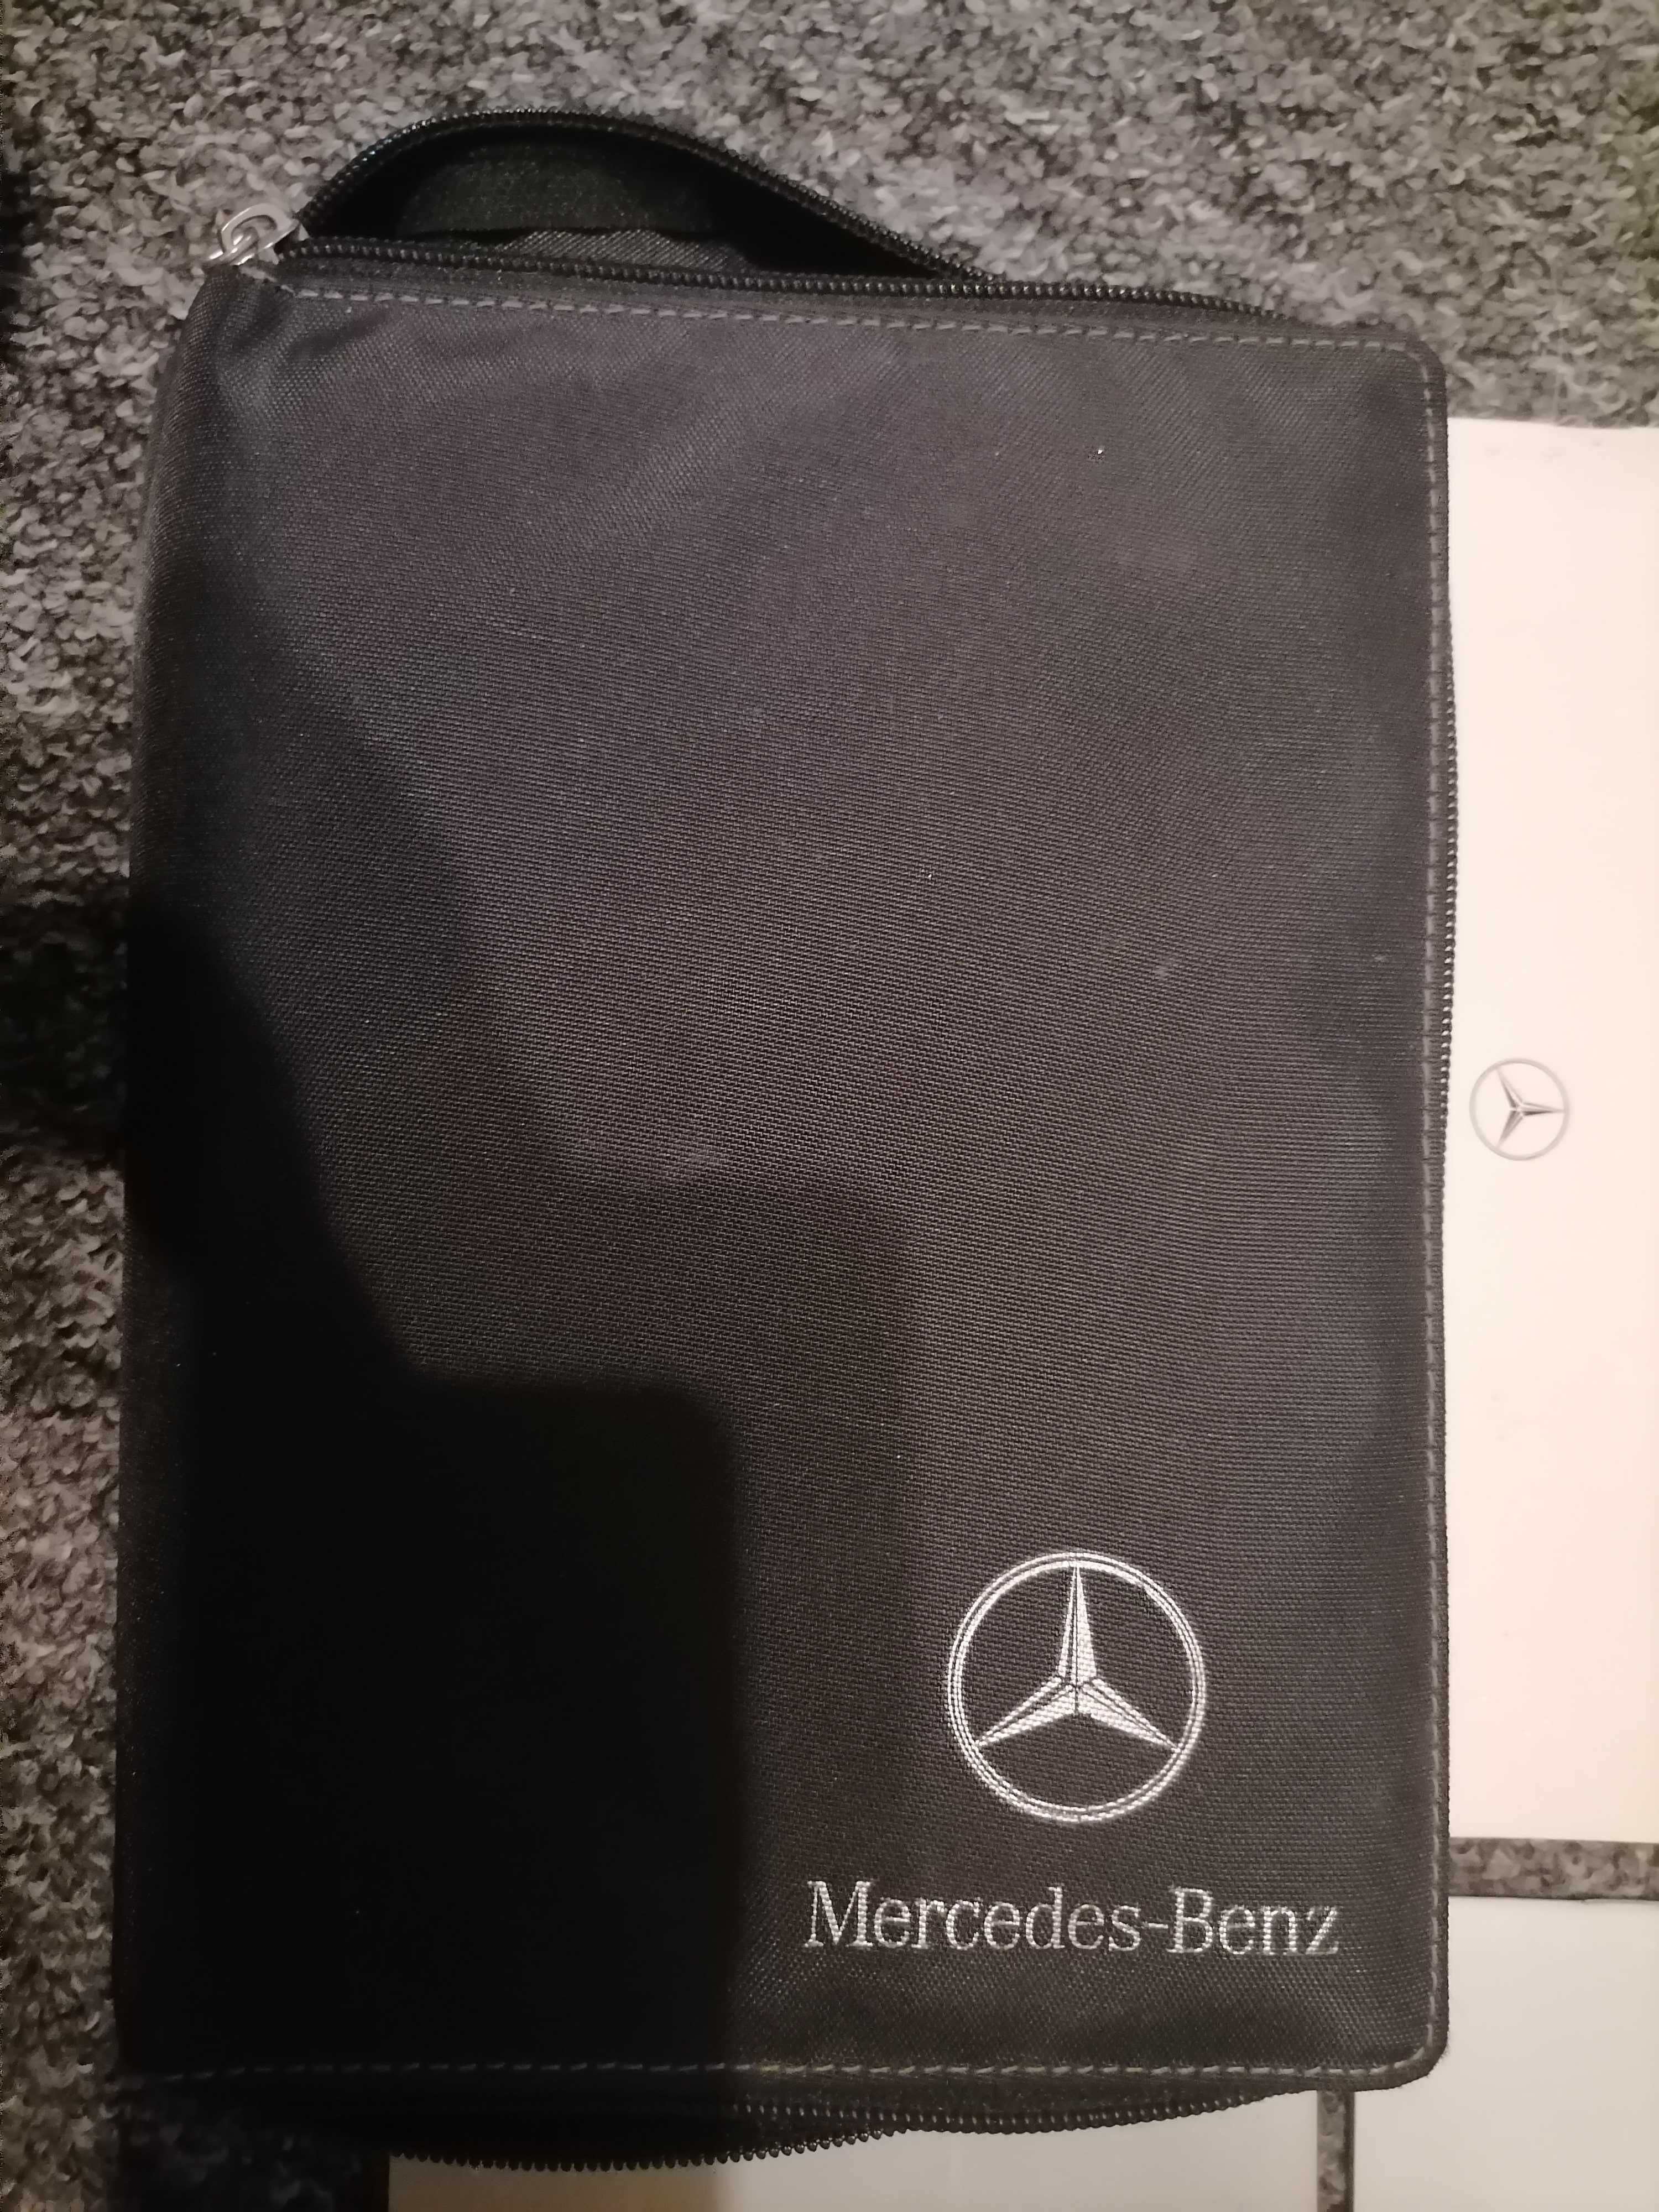 Instrukcja obsługi książka Mercedes benz